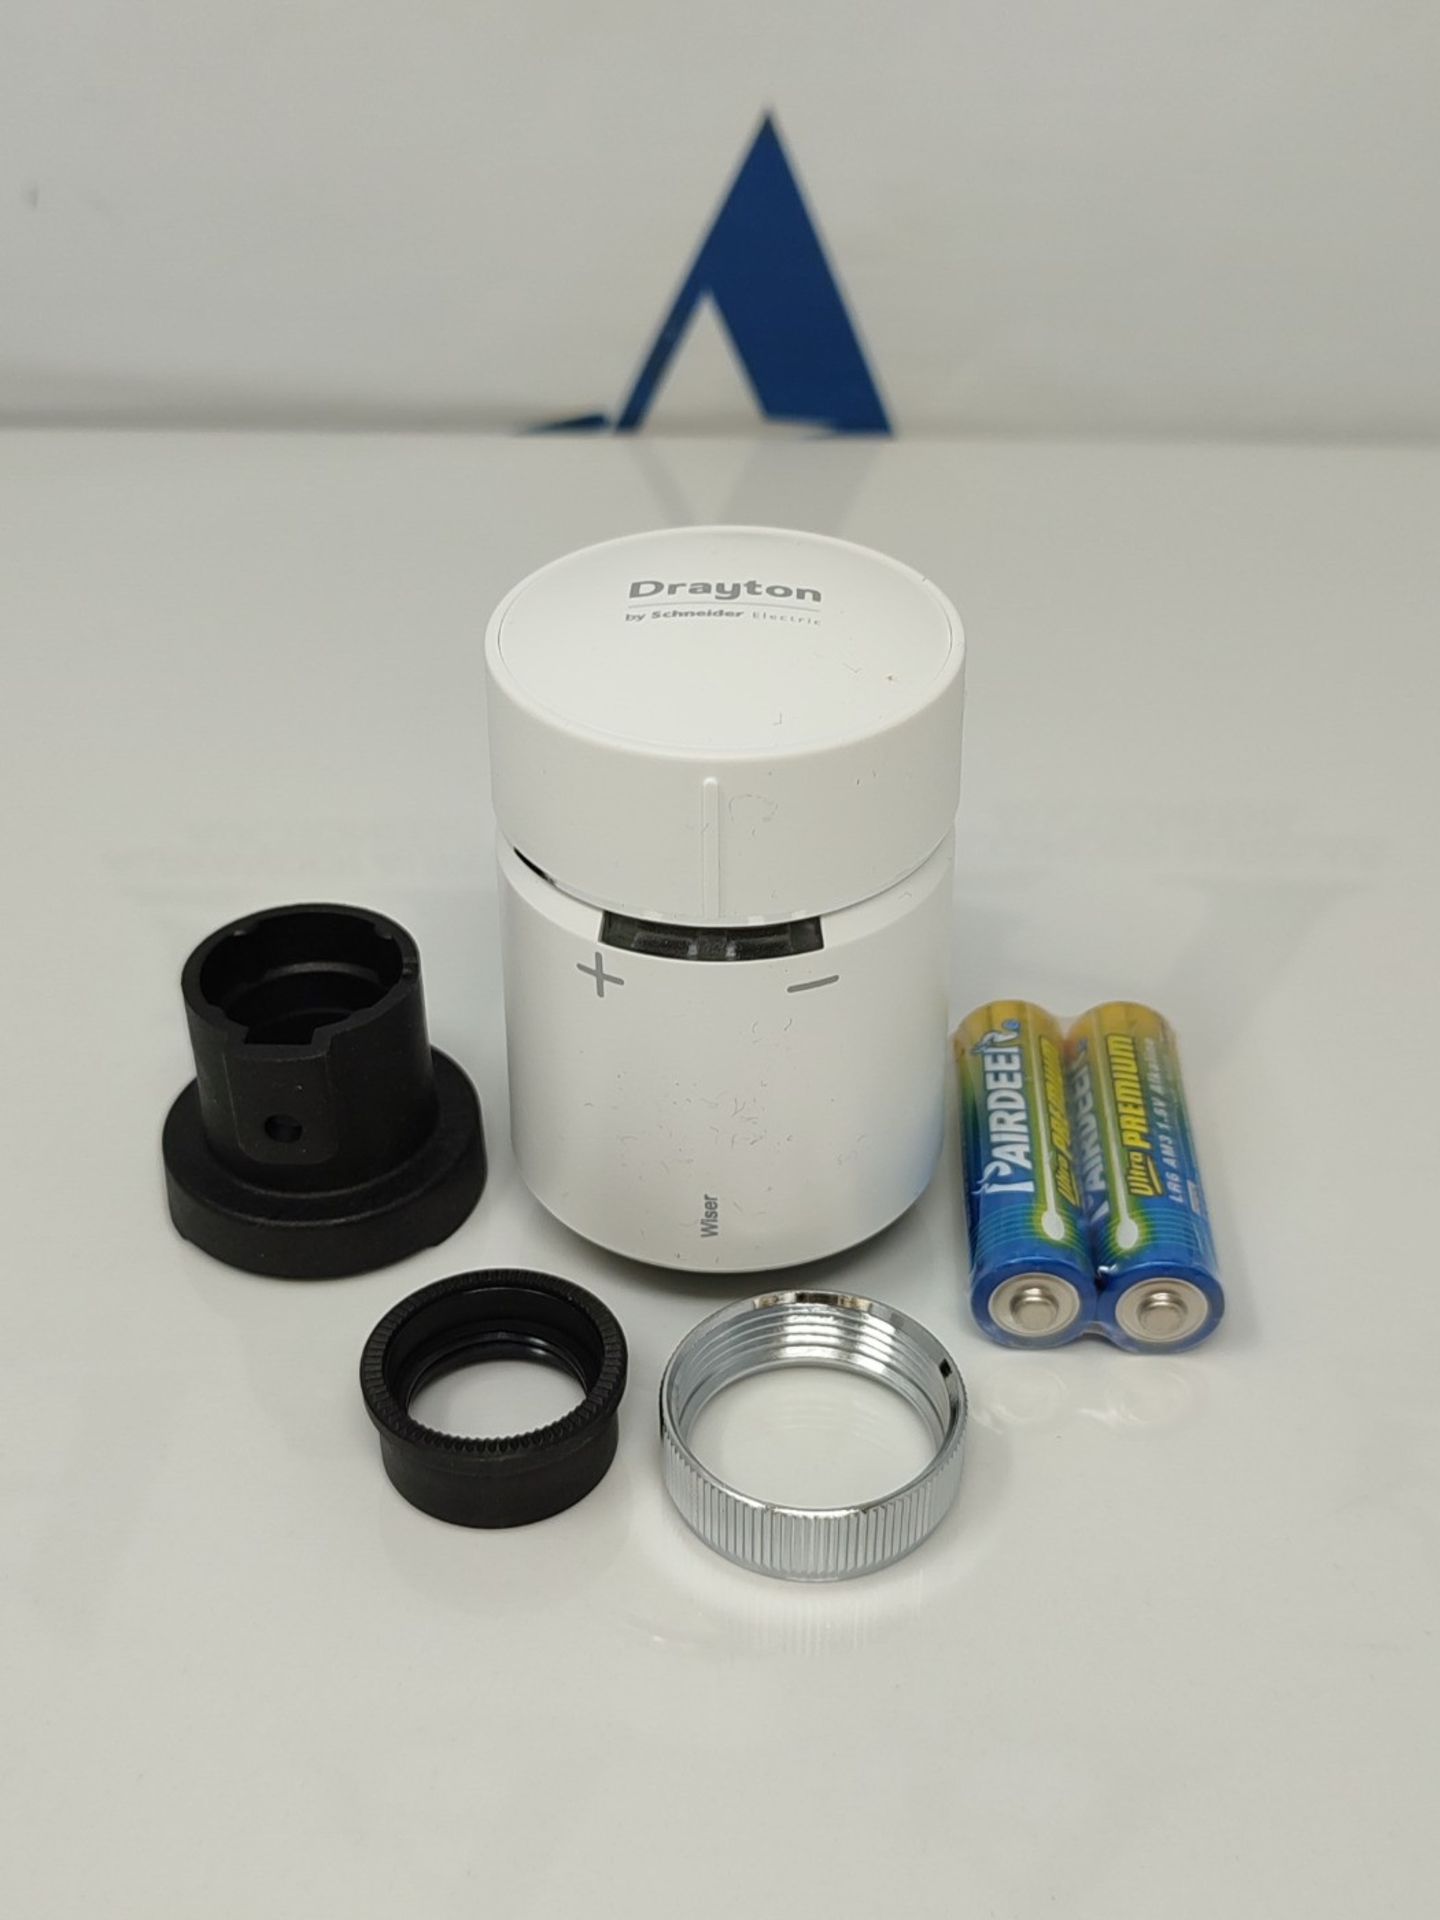 Drayton Wiser Smart Heating Radiator Thermostat Works with Amazon Alexa, Google Home, - Bild 3 aus 3